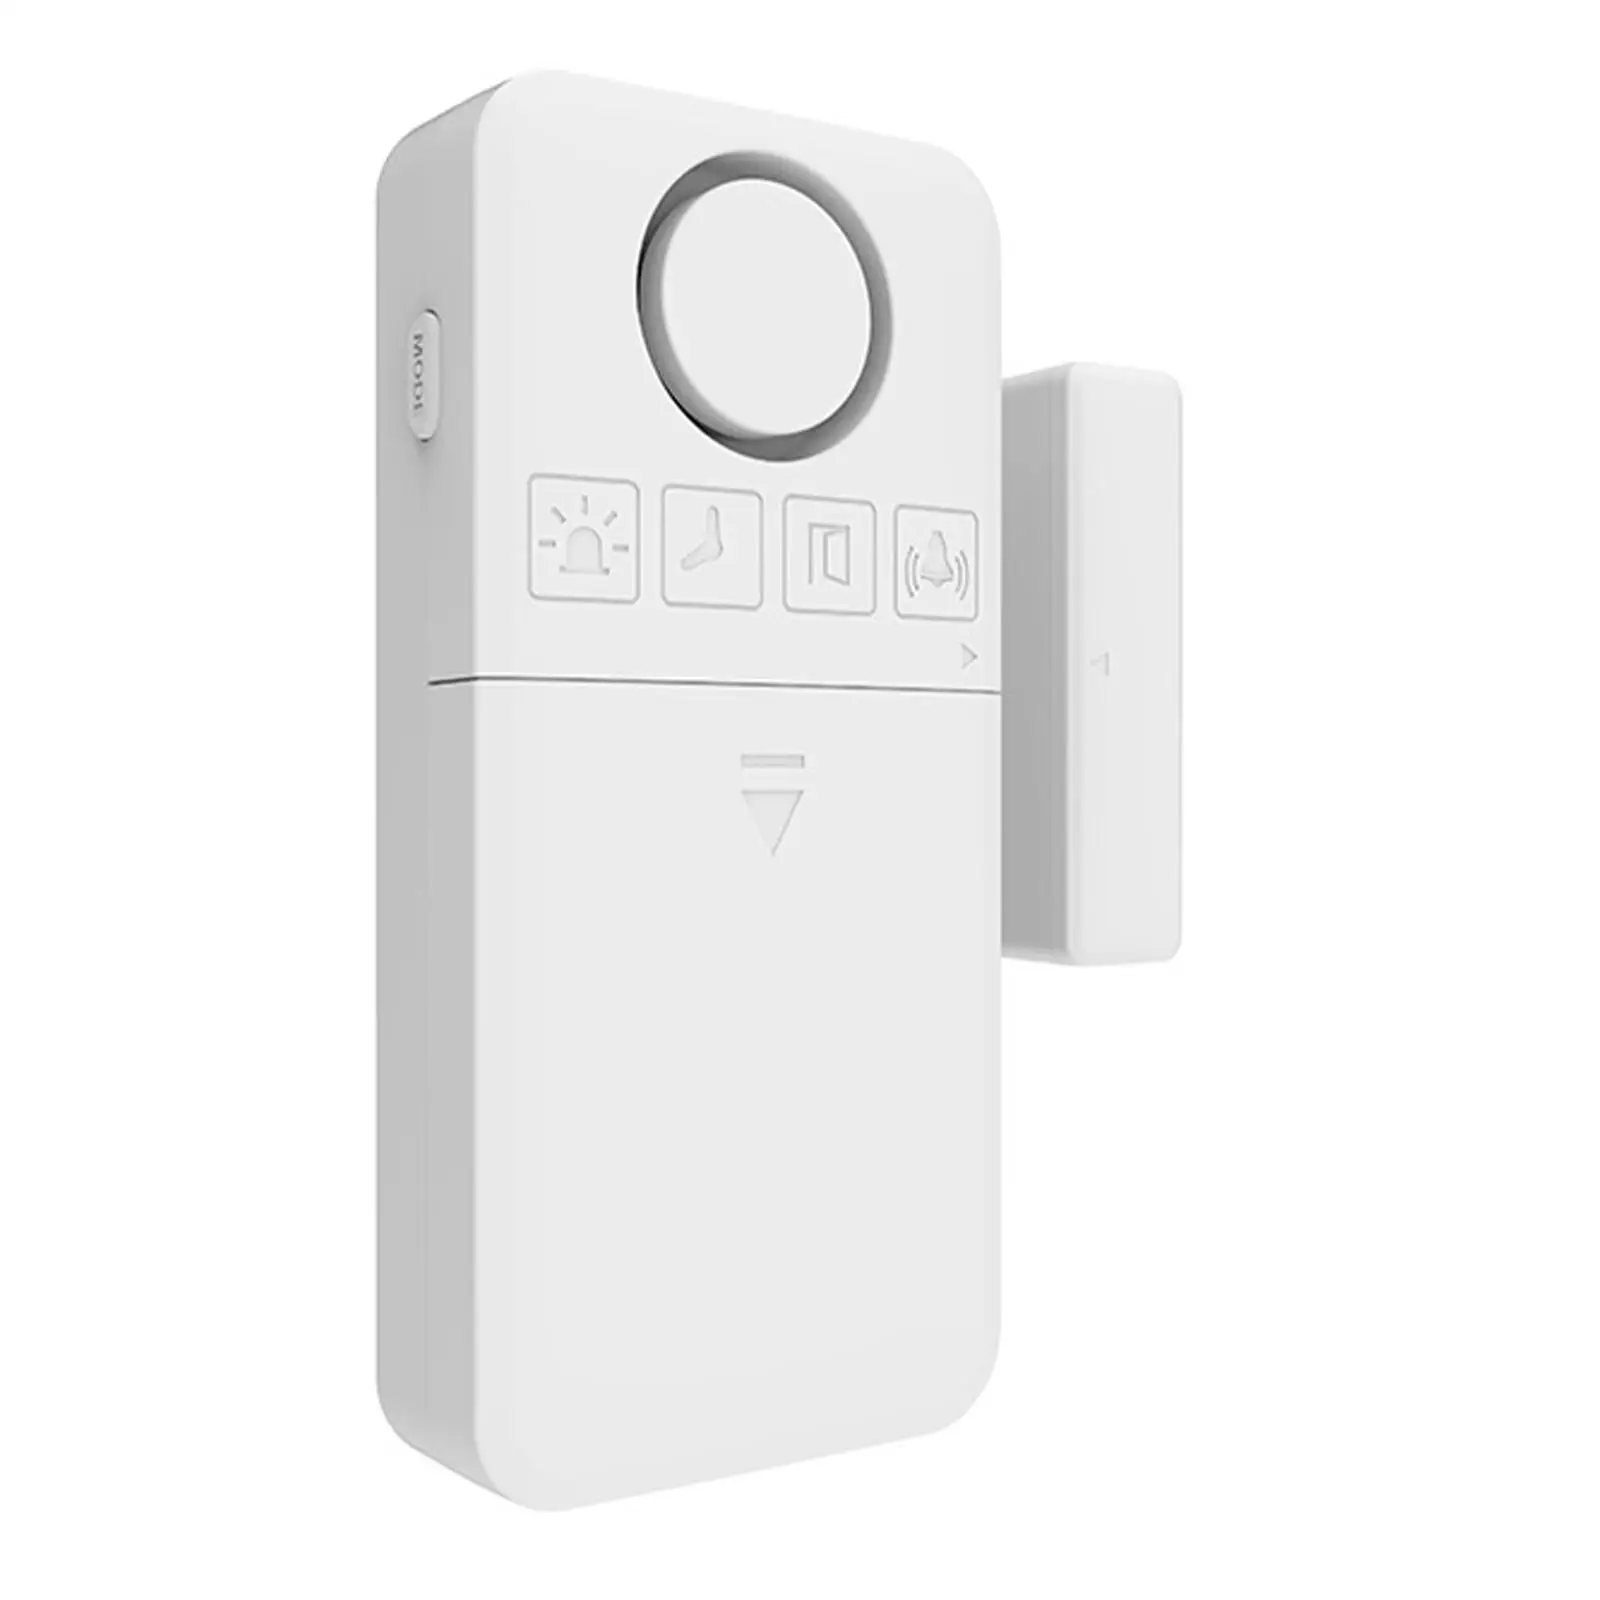 Door and Window Alarms Pool Alarm Doorbell Protector Home Security Alarm System Door Alarm Easy to Install for Home Office Dorm